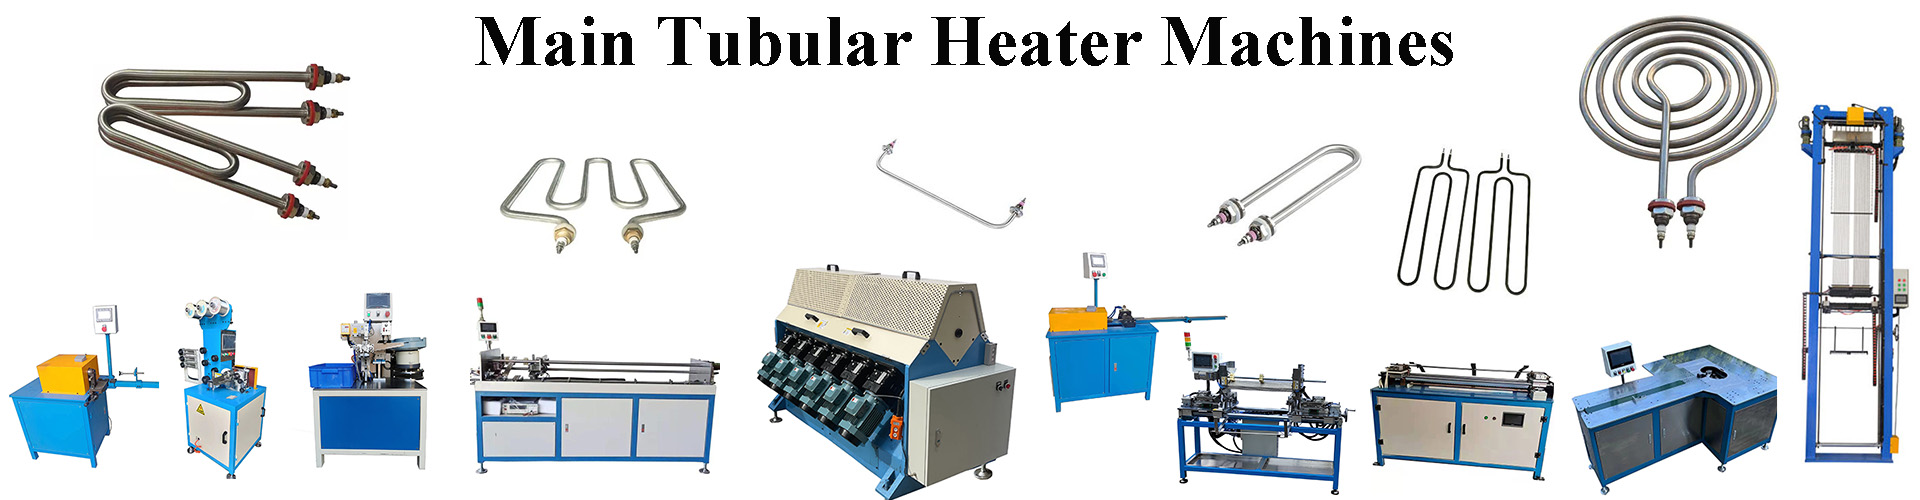 Main Machines for Tubular heaters